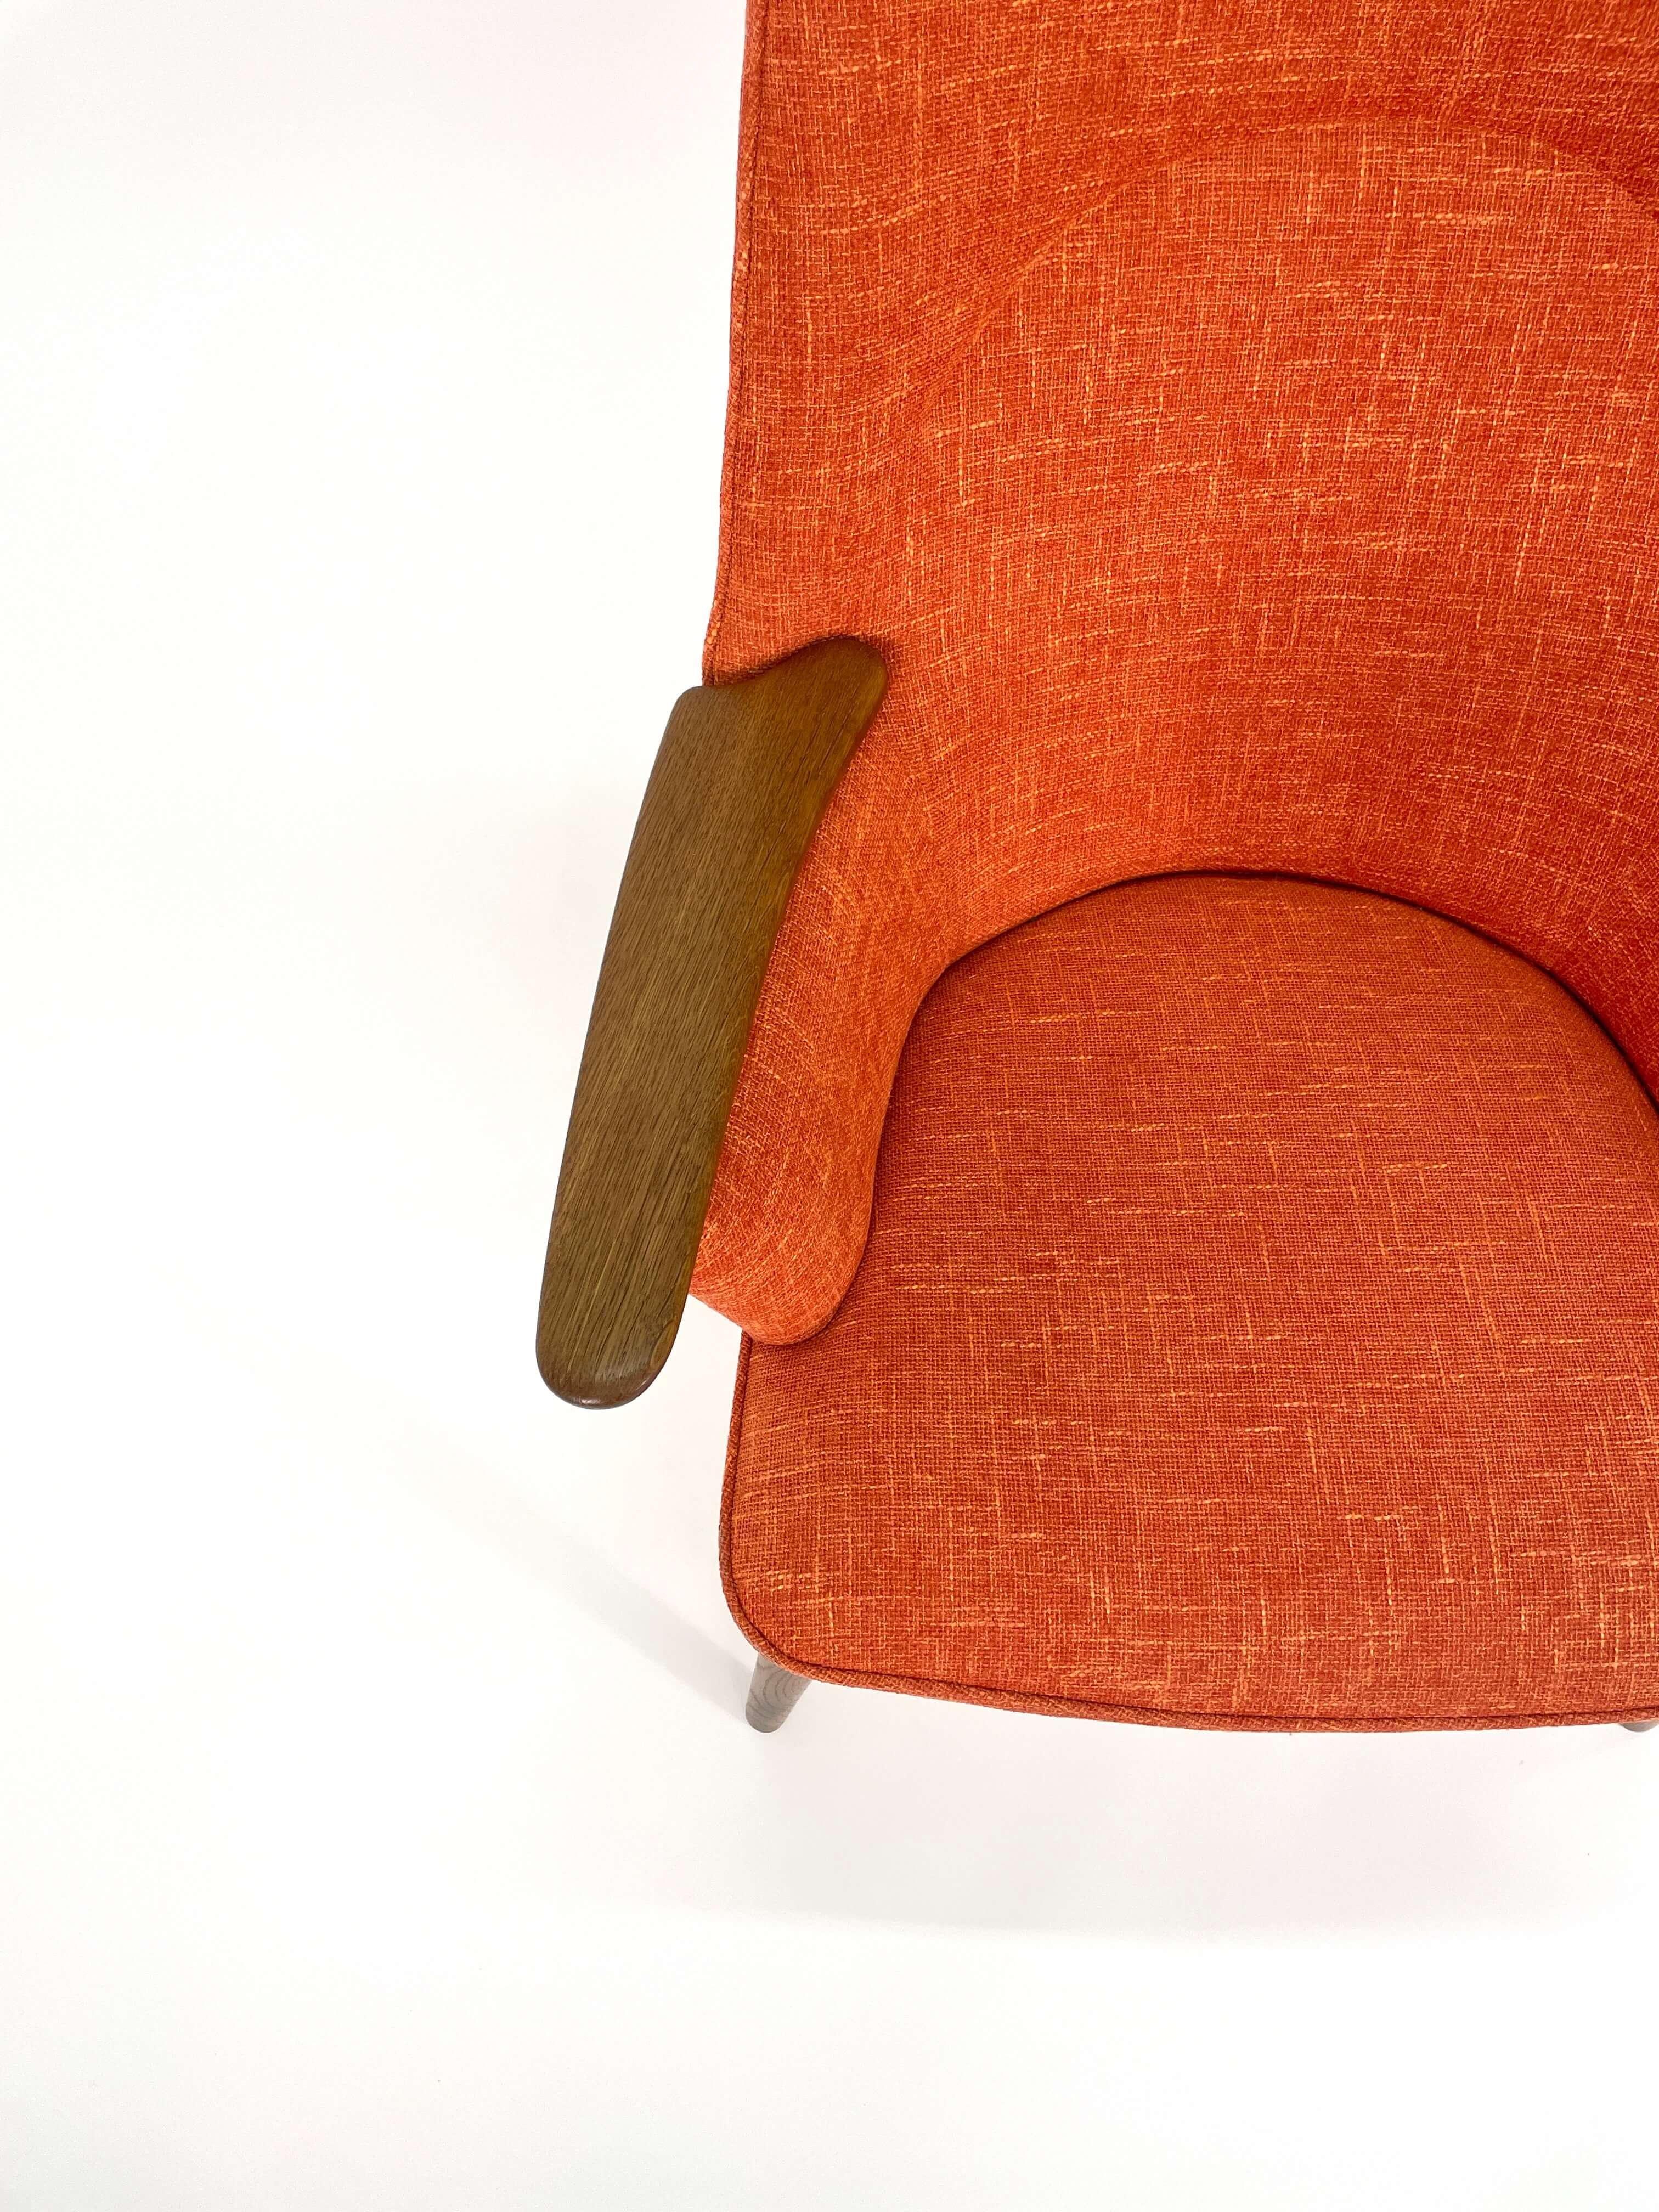 Hans J. Wegner Mama Bear Lounge Chair Model AP 27 For Sale 12